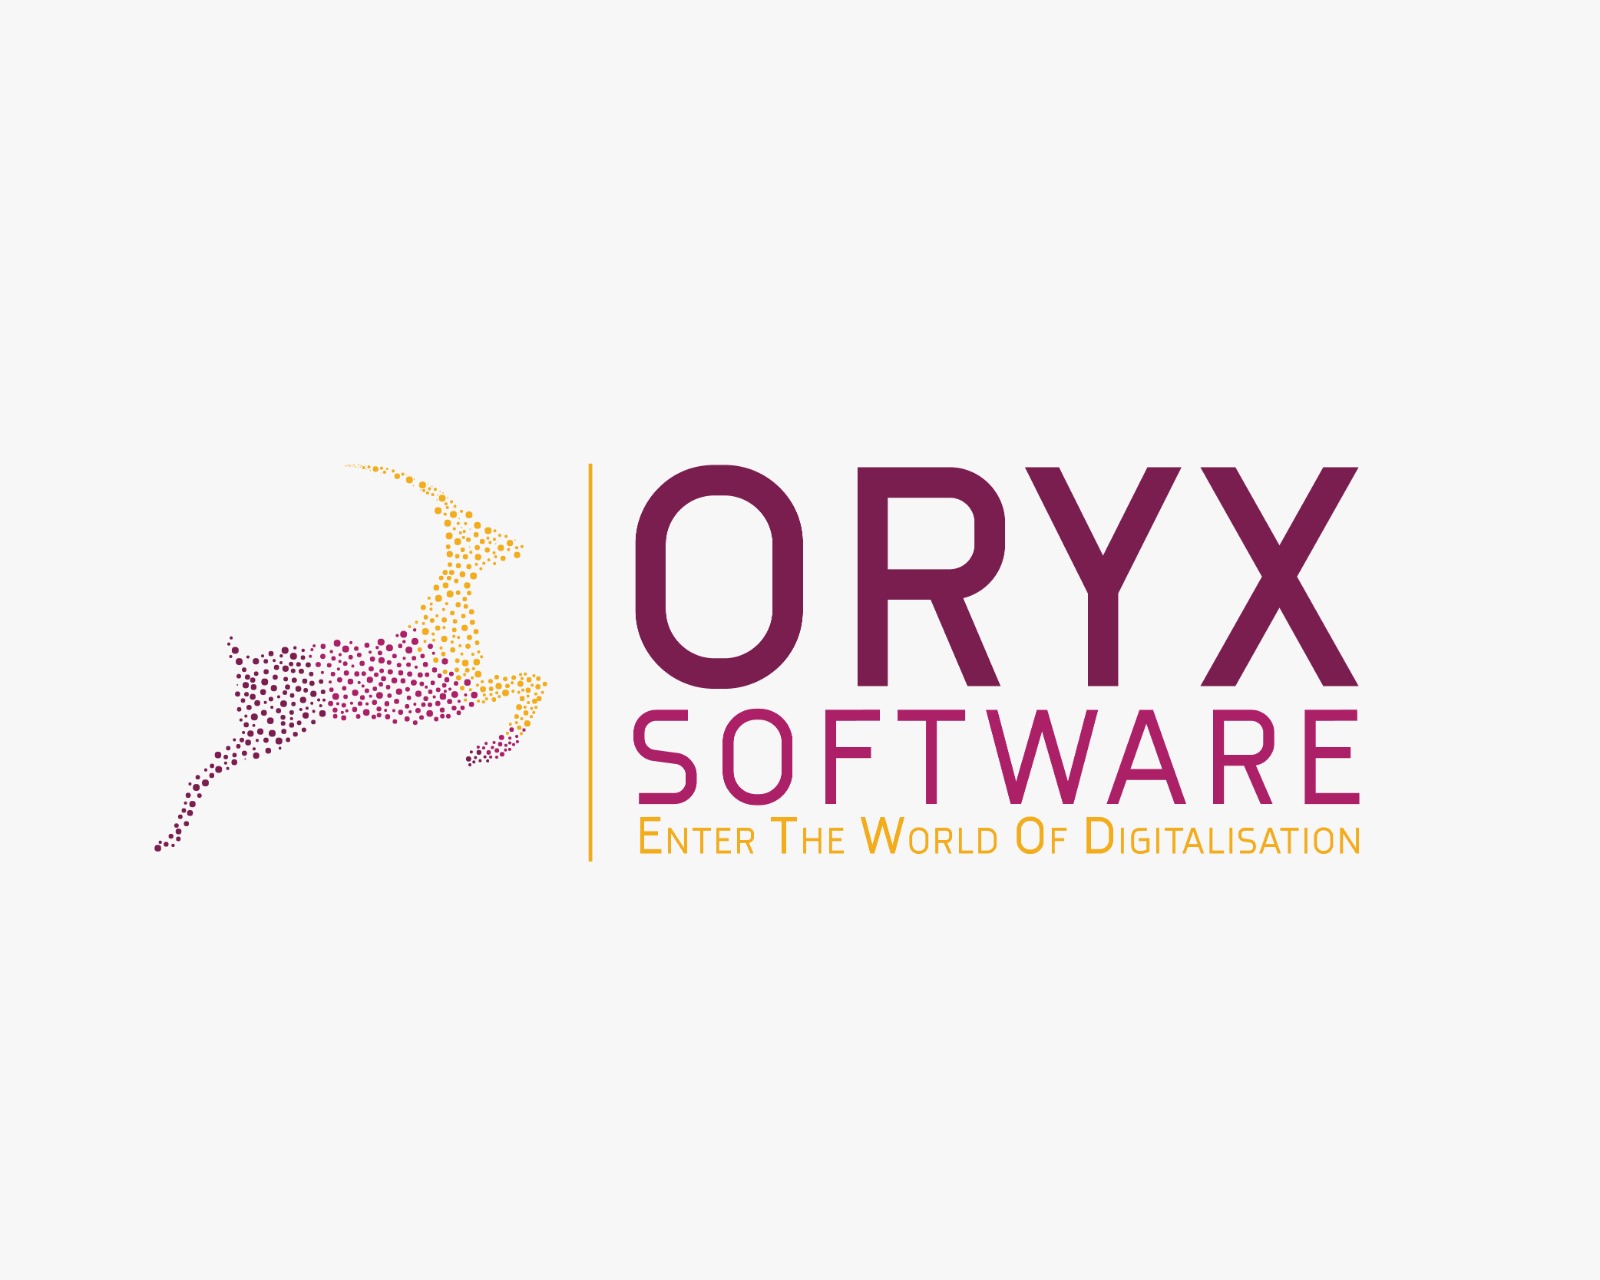 Oryx Software